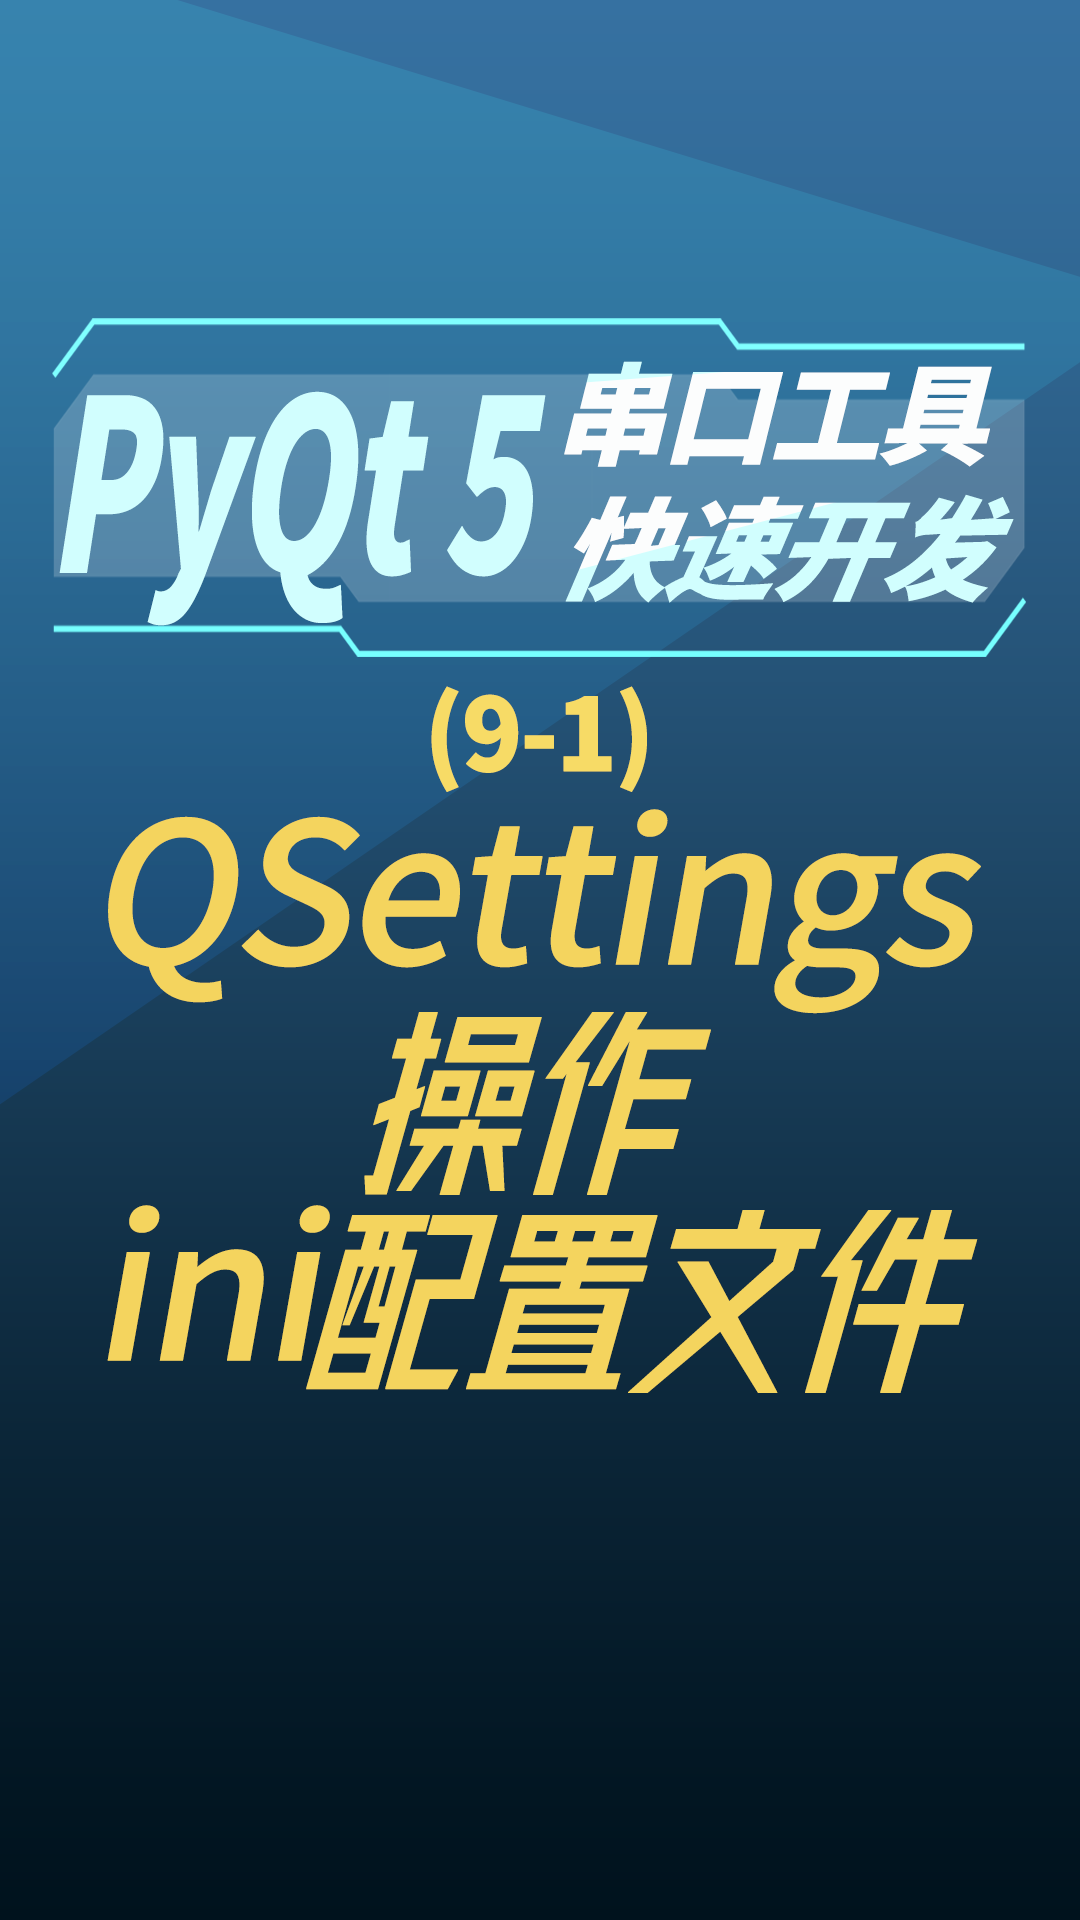 pyqt5串口工具快速开发9-1QSettings操作ini配置文件#串口工具开发 